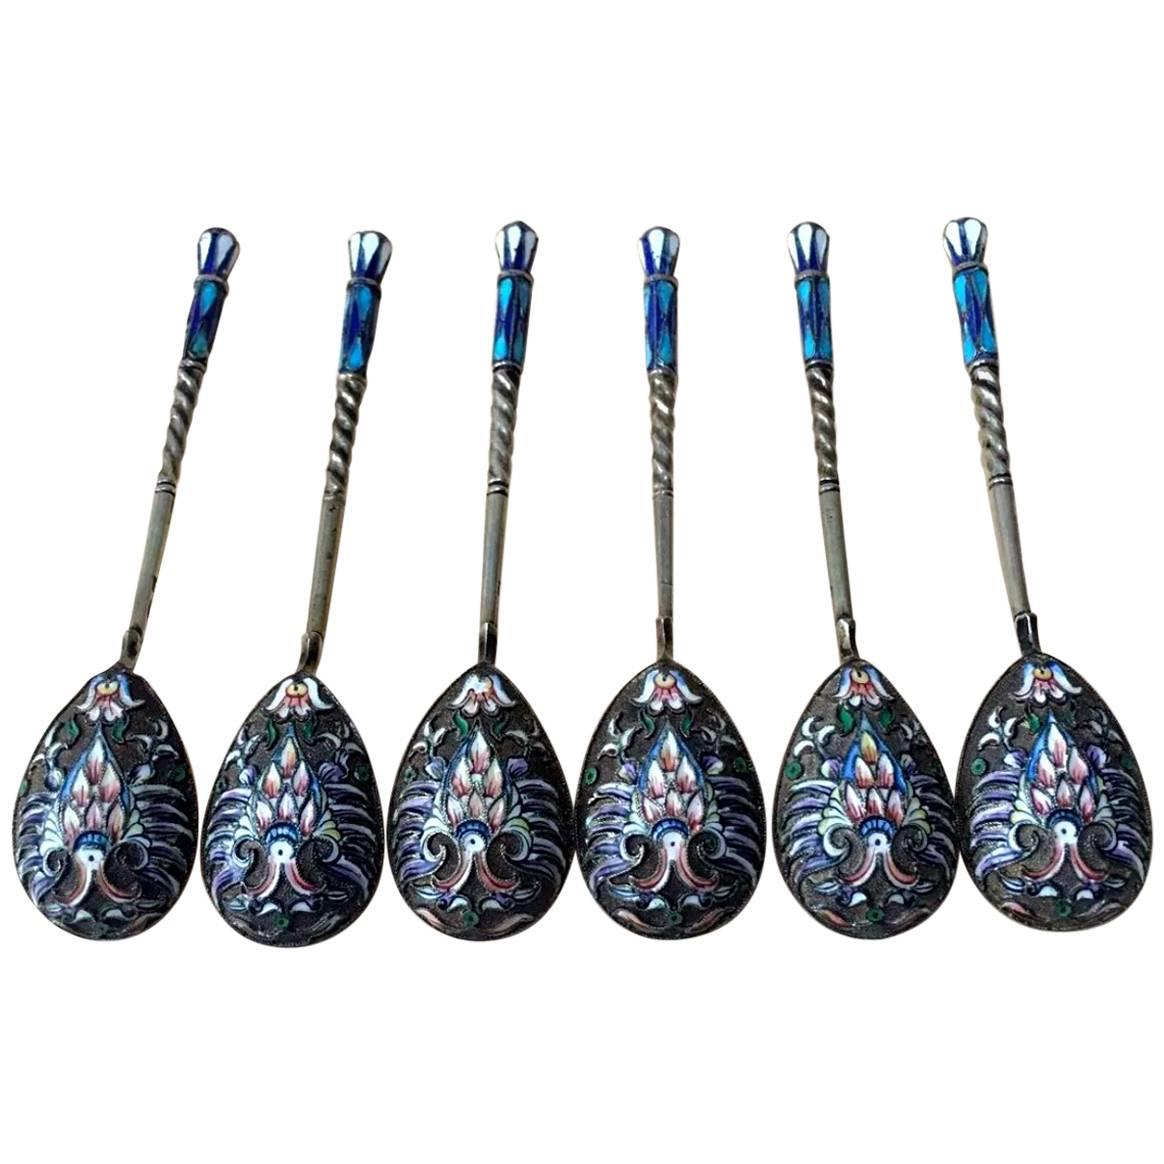 Good Set of Six Russian Imperial Silver Cloisonné Enamel Spoons